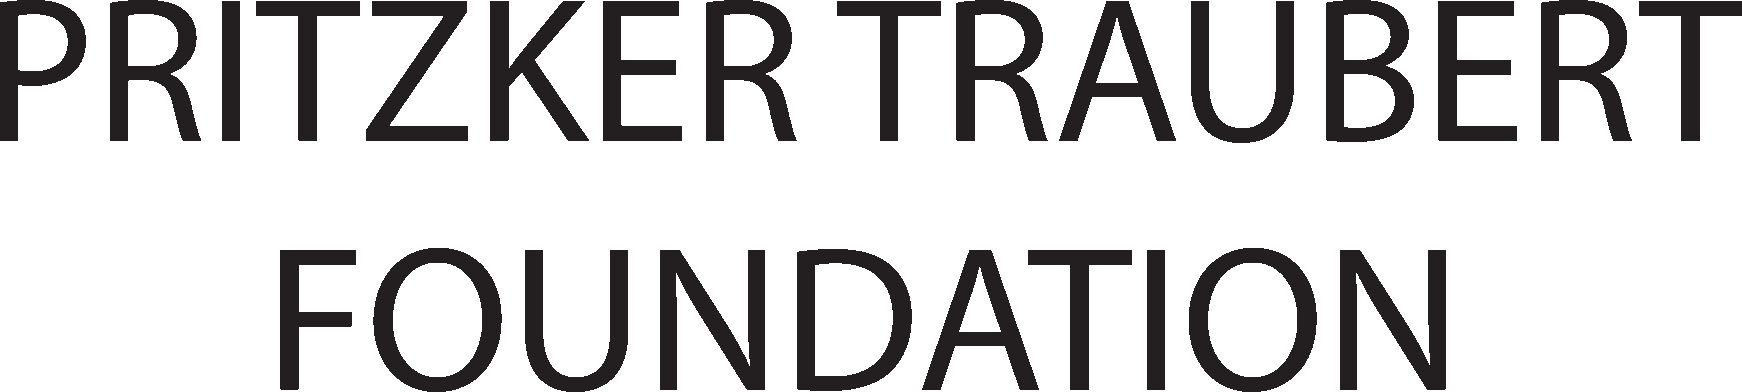 Pritzker Traubert Foundation